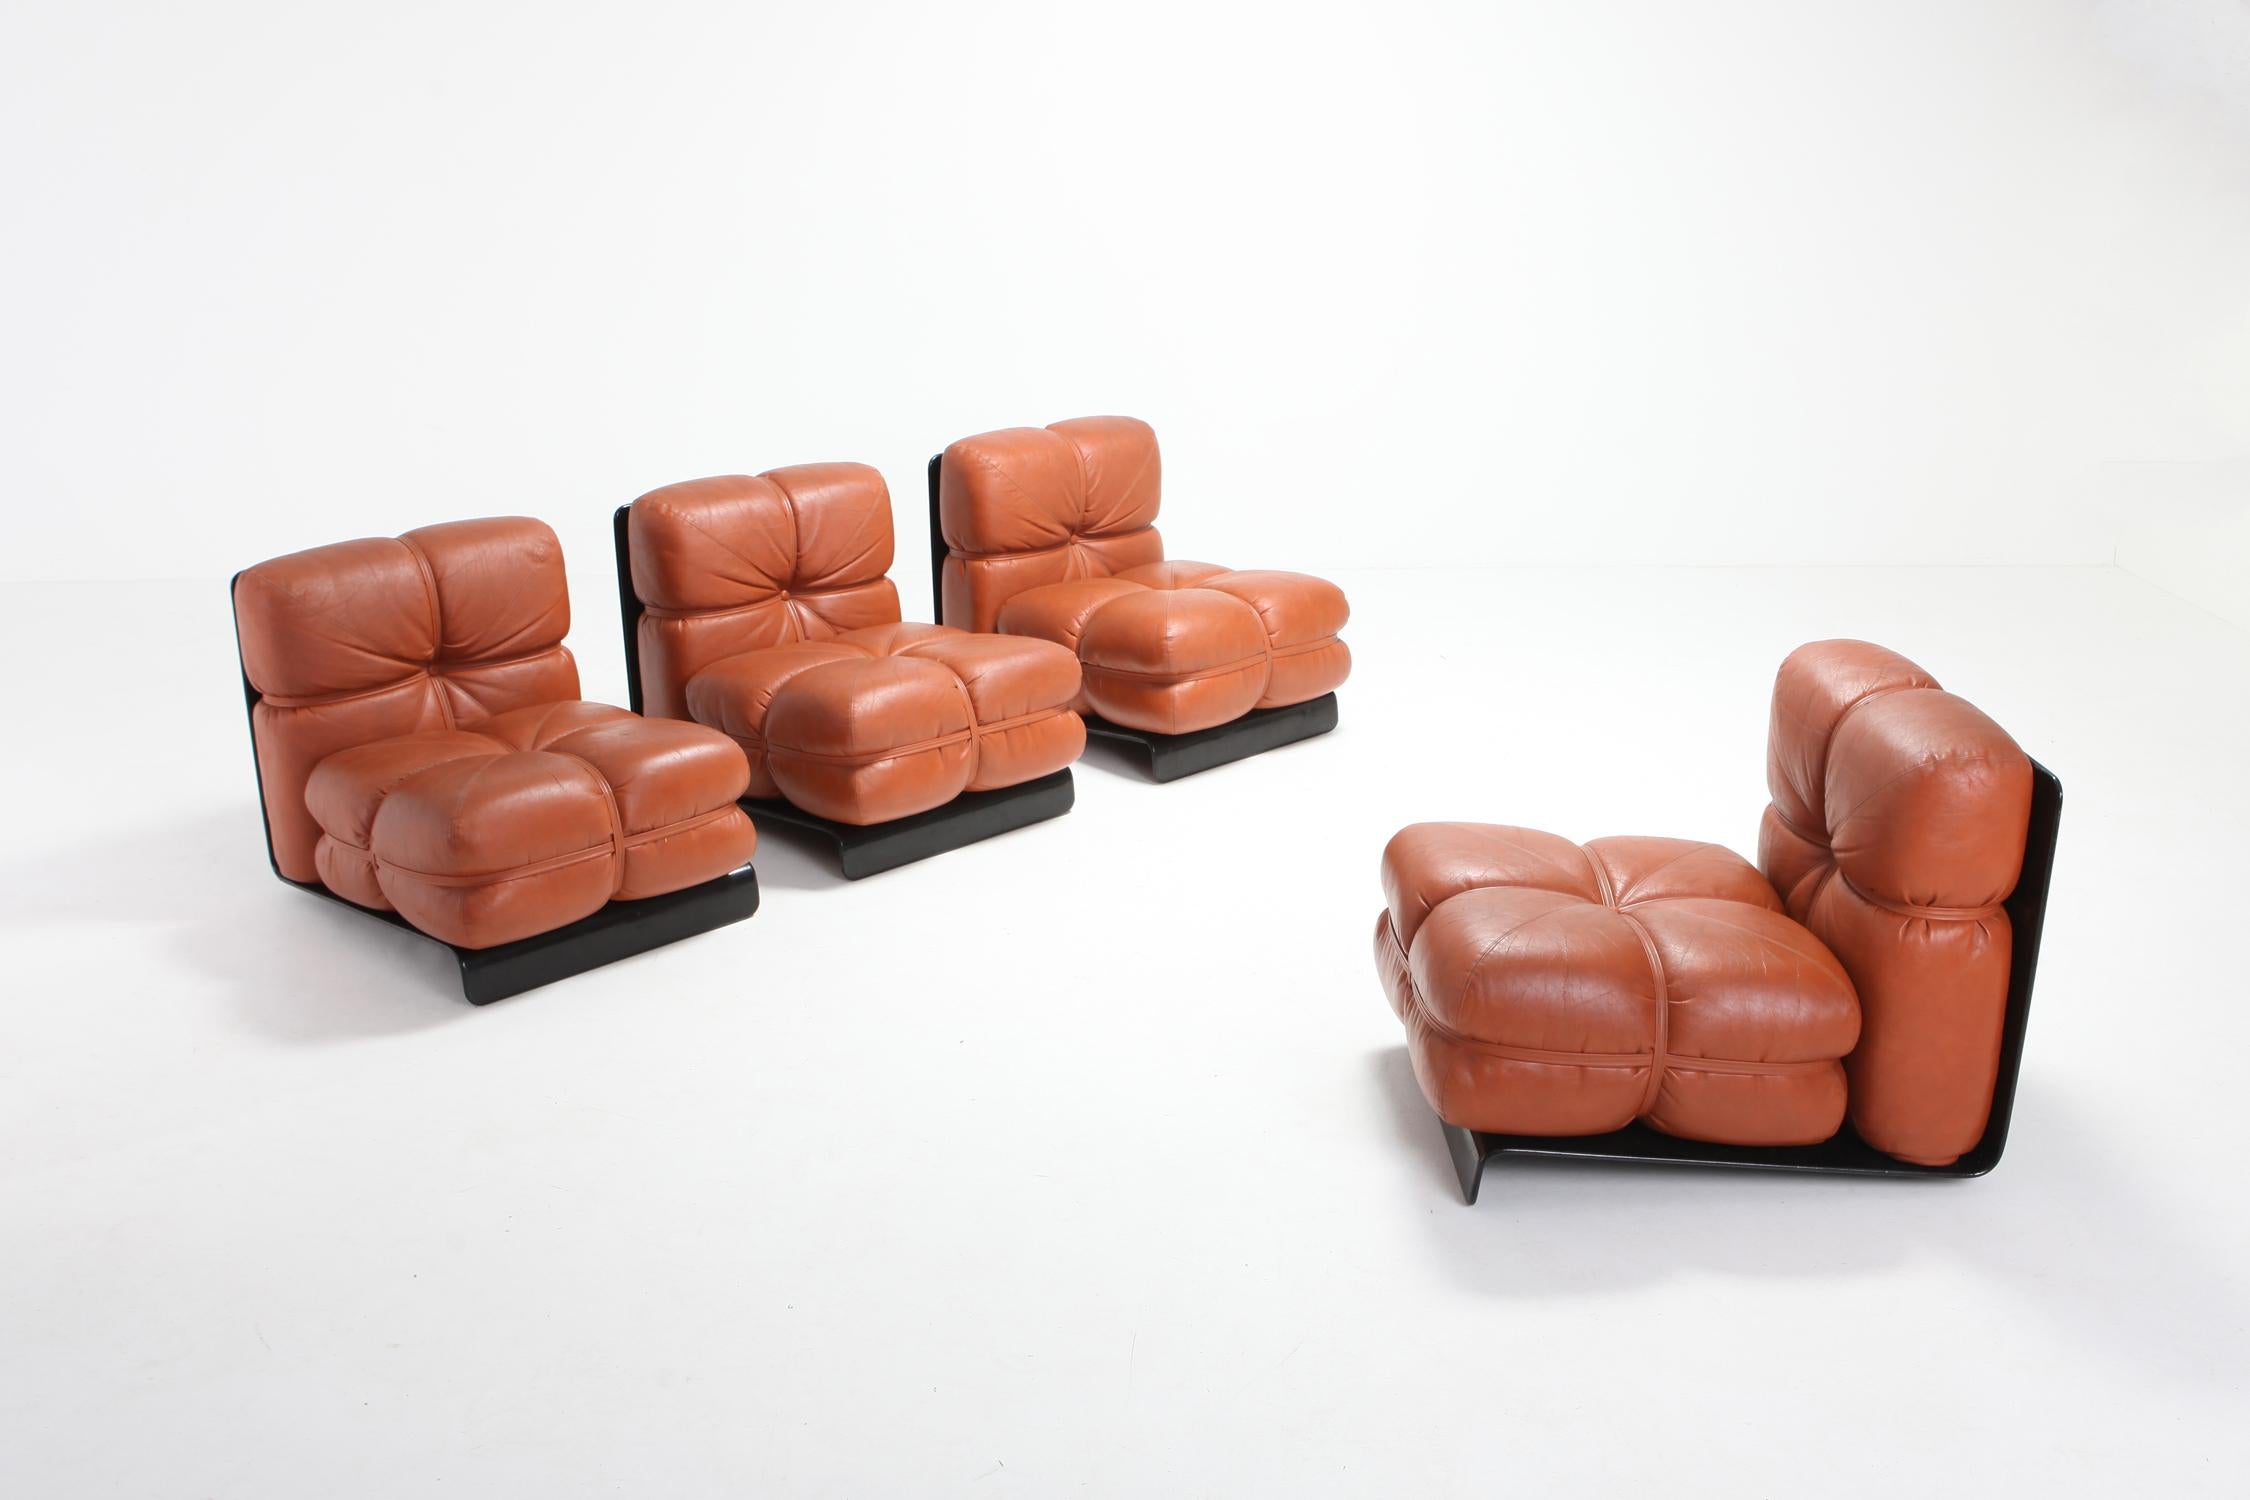 Leather Carla Venosta Ultra Rare 'San Martino' Sectional Sofa for Full